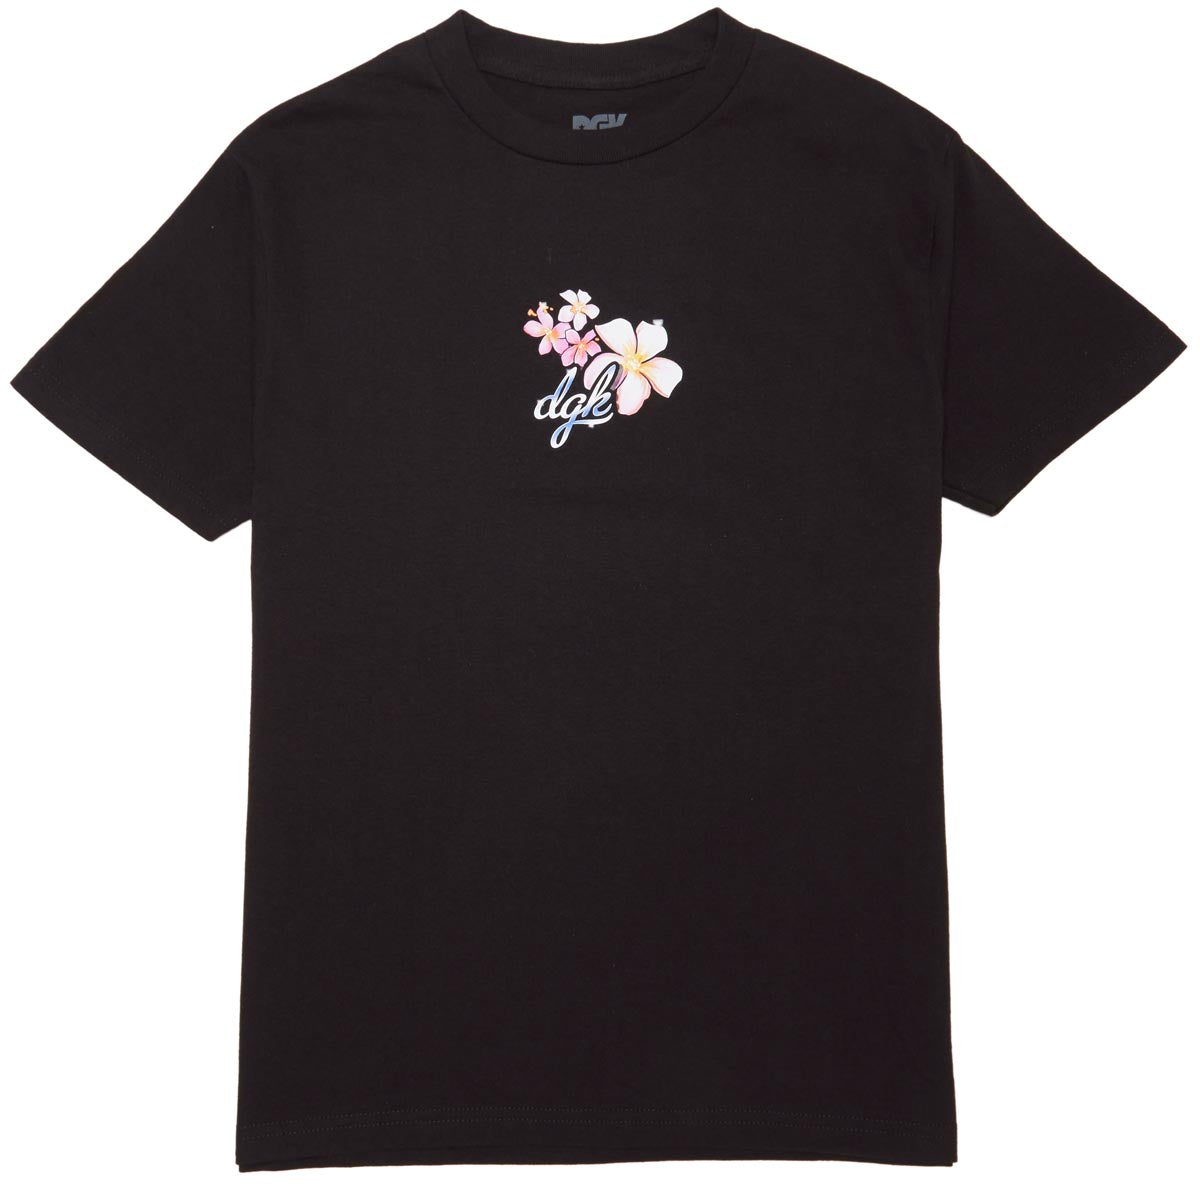 DGK Koi T-Shirt - Black image 2